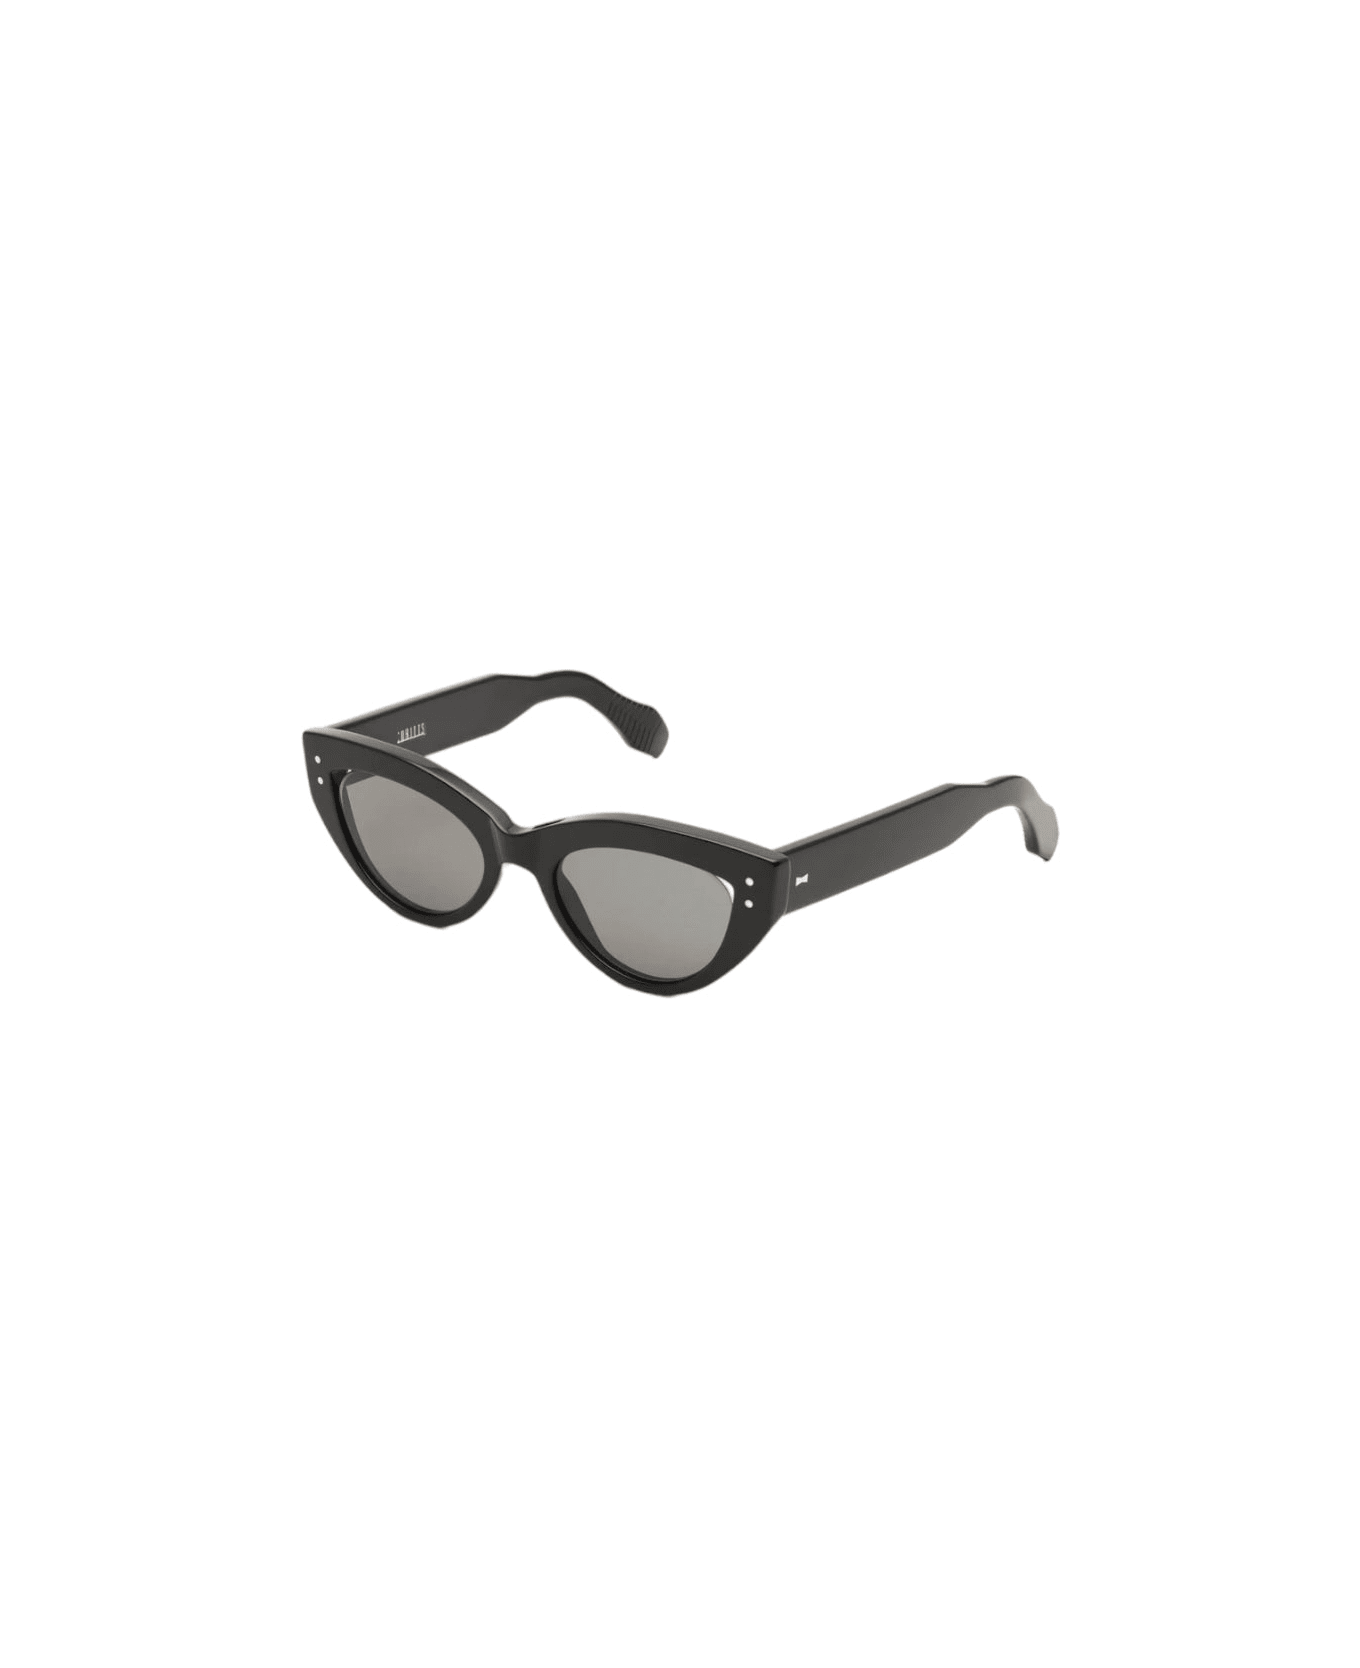 Cubitts Caledonia Sunglasses